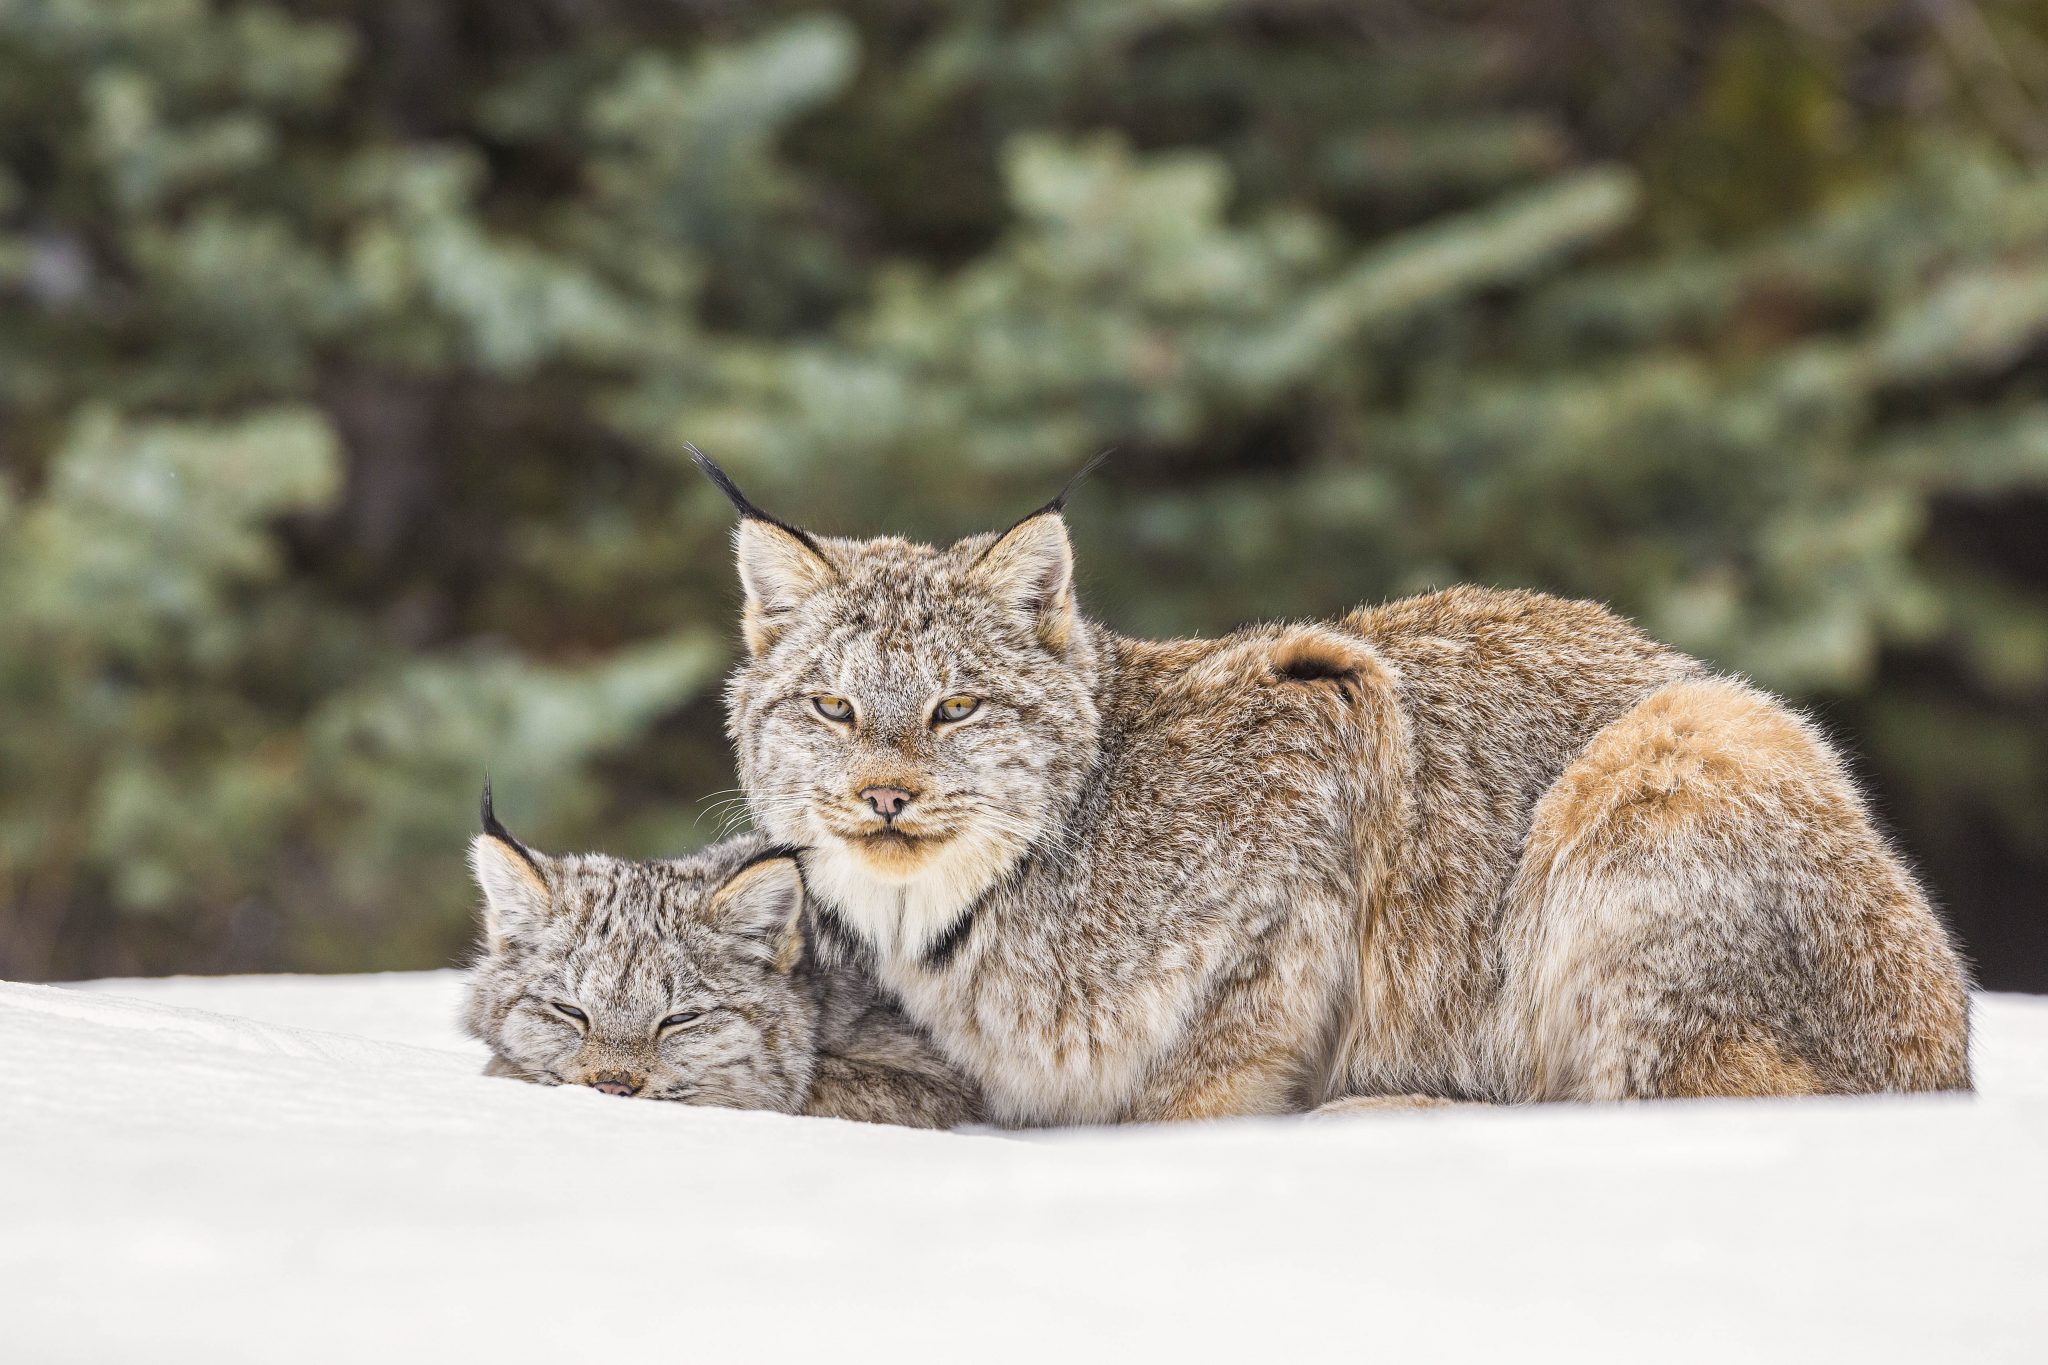 Third Annual Wyoming Wildlife Calendar photo contest Sheridan Media